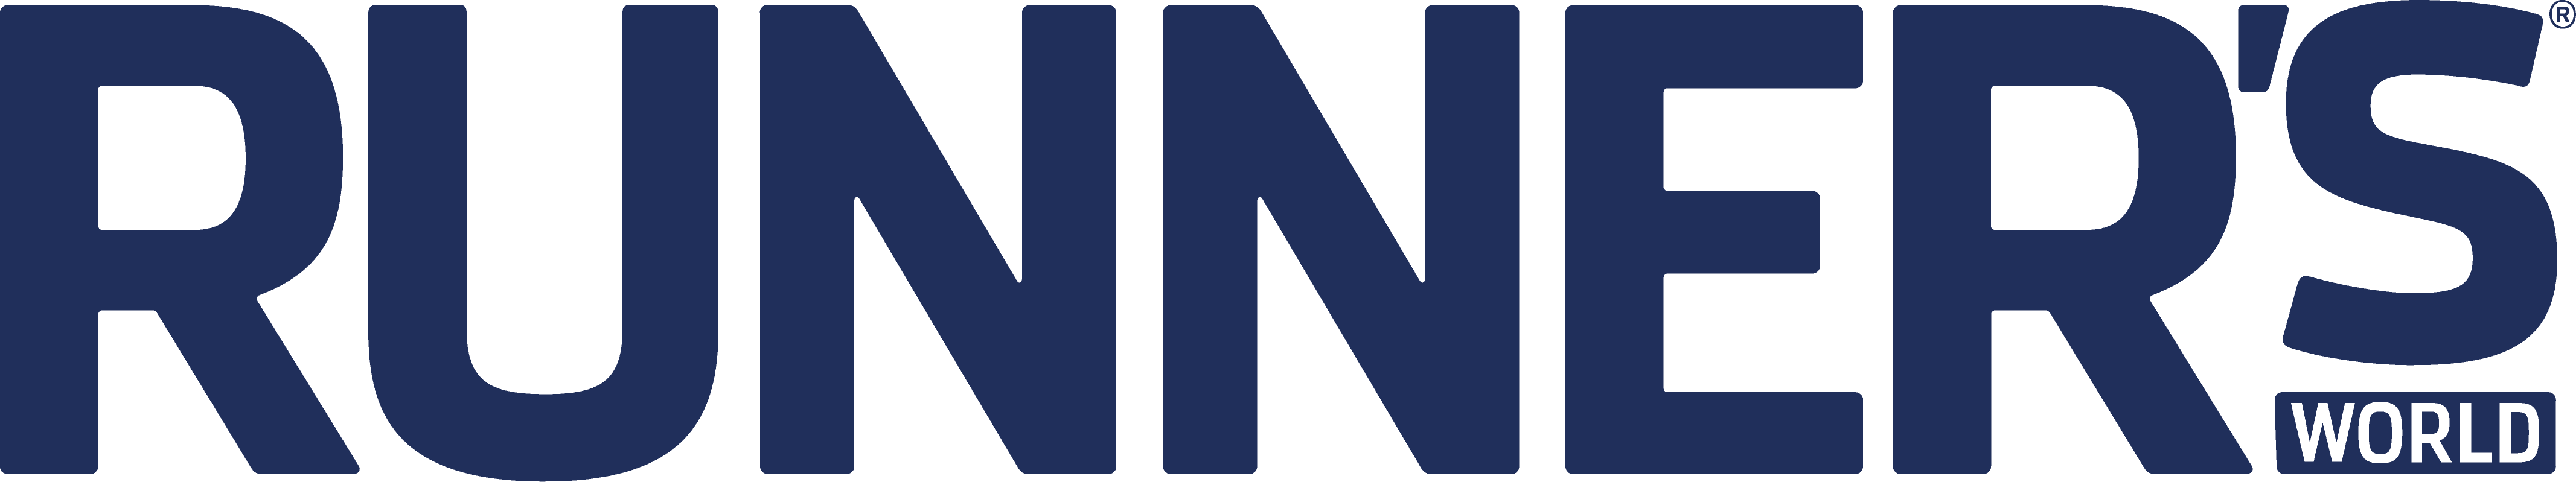 runners-world-logo.png (45 KB)